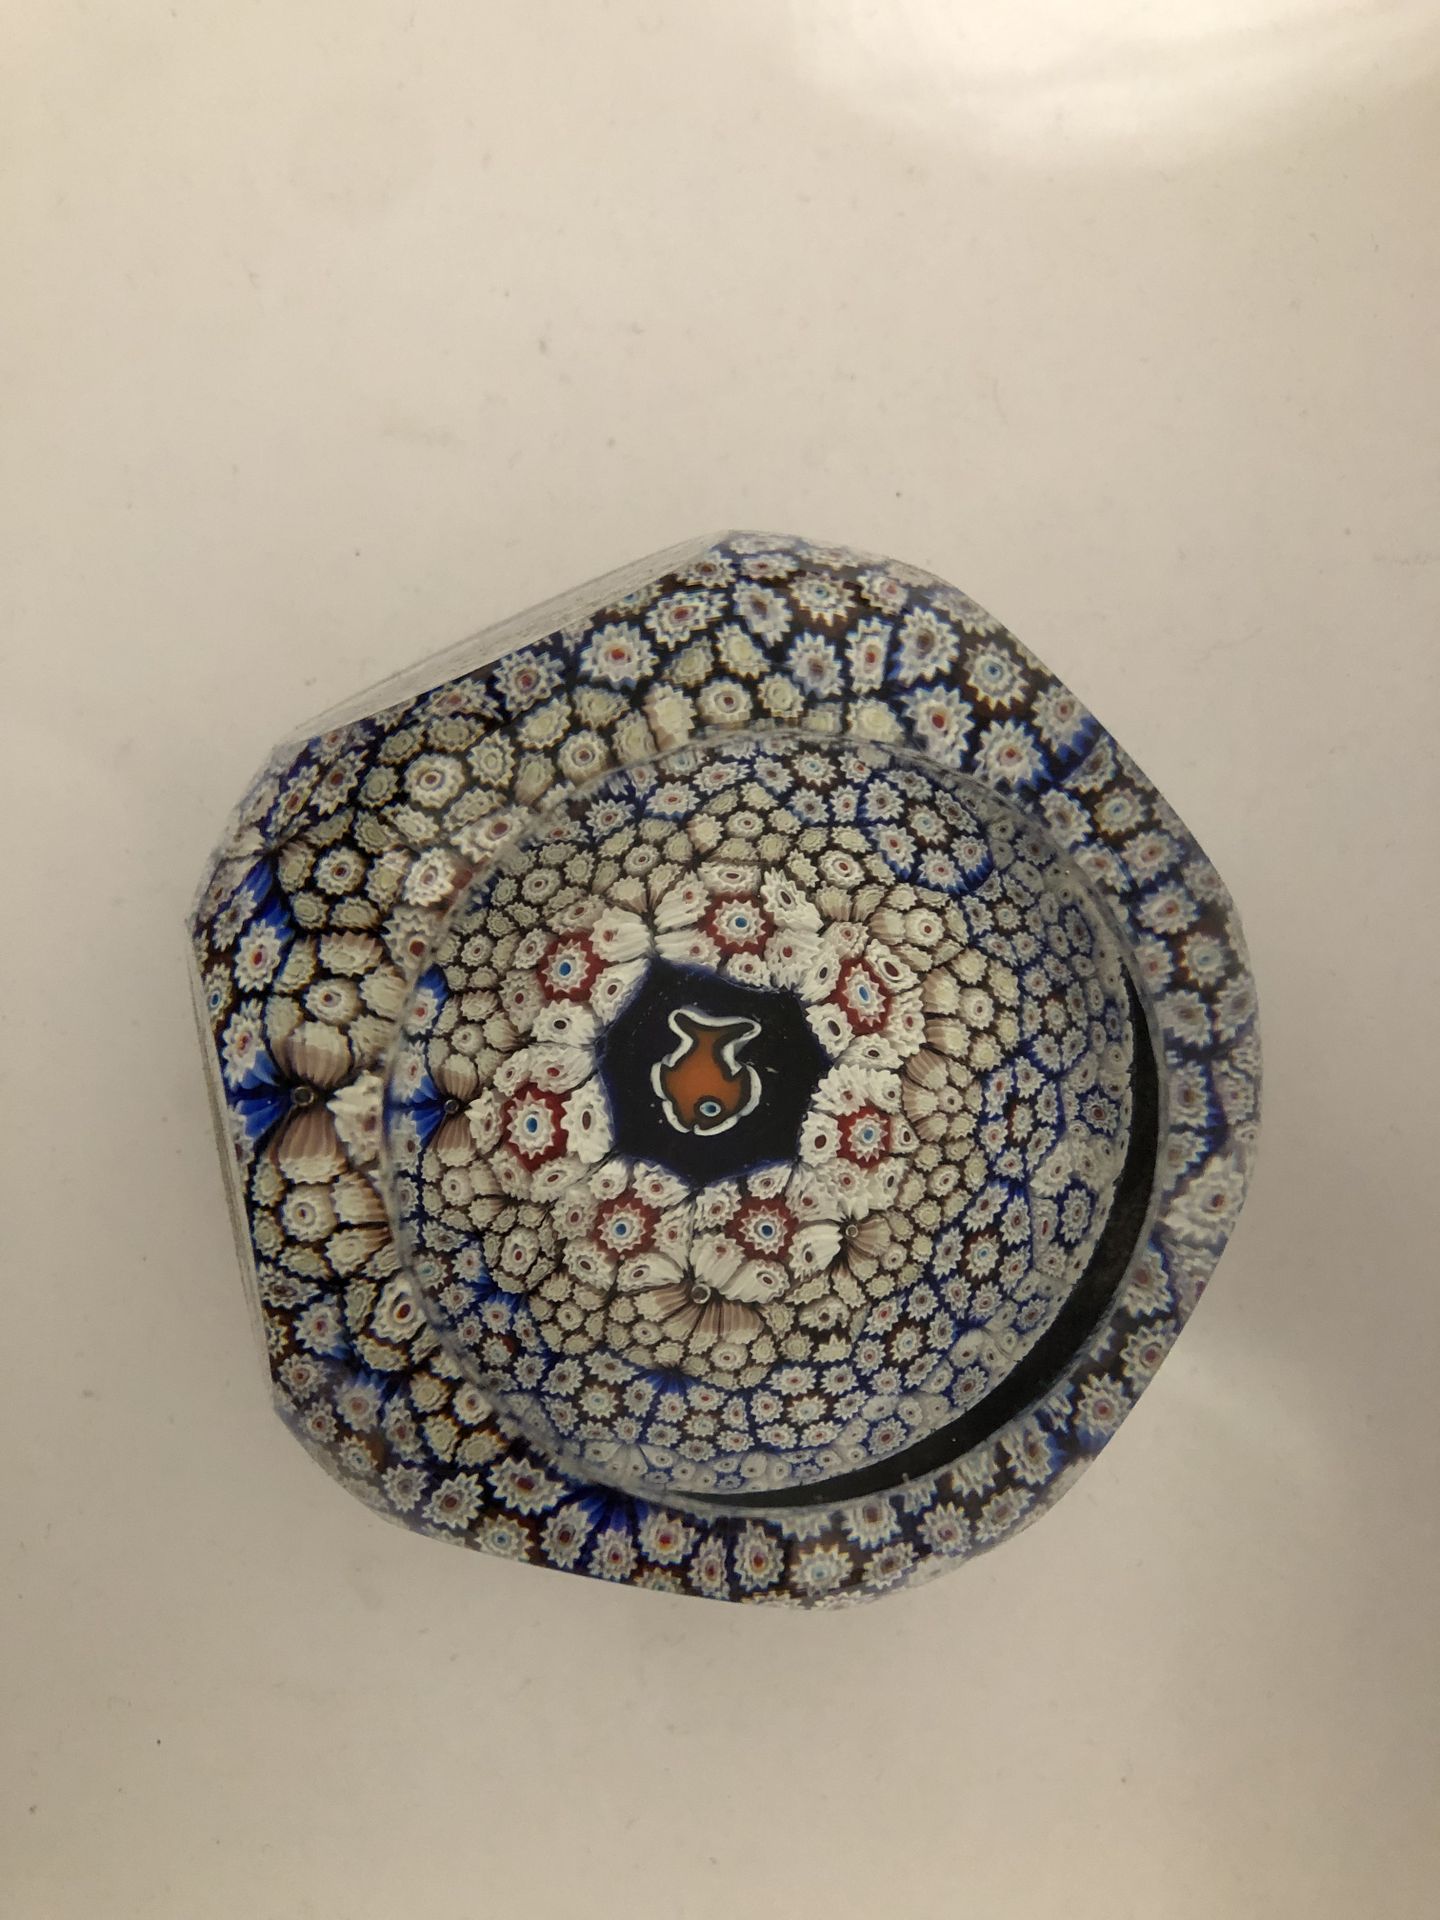 Null (E) 大型圆形刻面水晶镇

硫化物装饰，中央有一条鱼，边上有白色、蓝色、红色和粉色的米勒弗里。

直径：11.5厘米